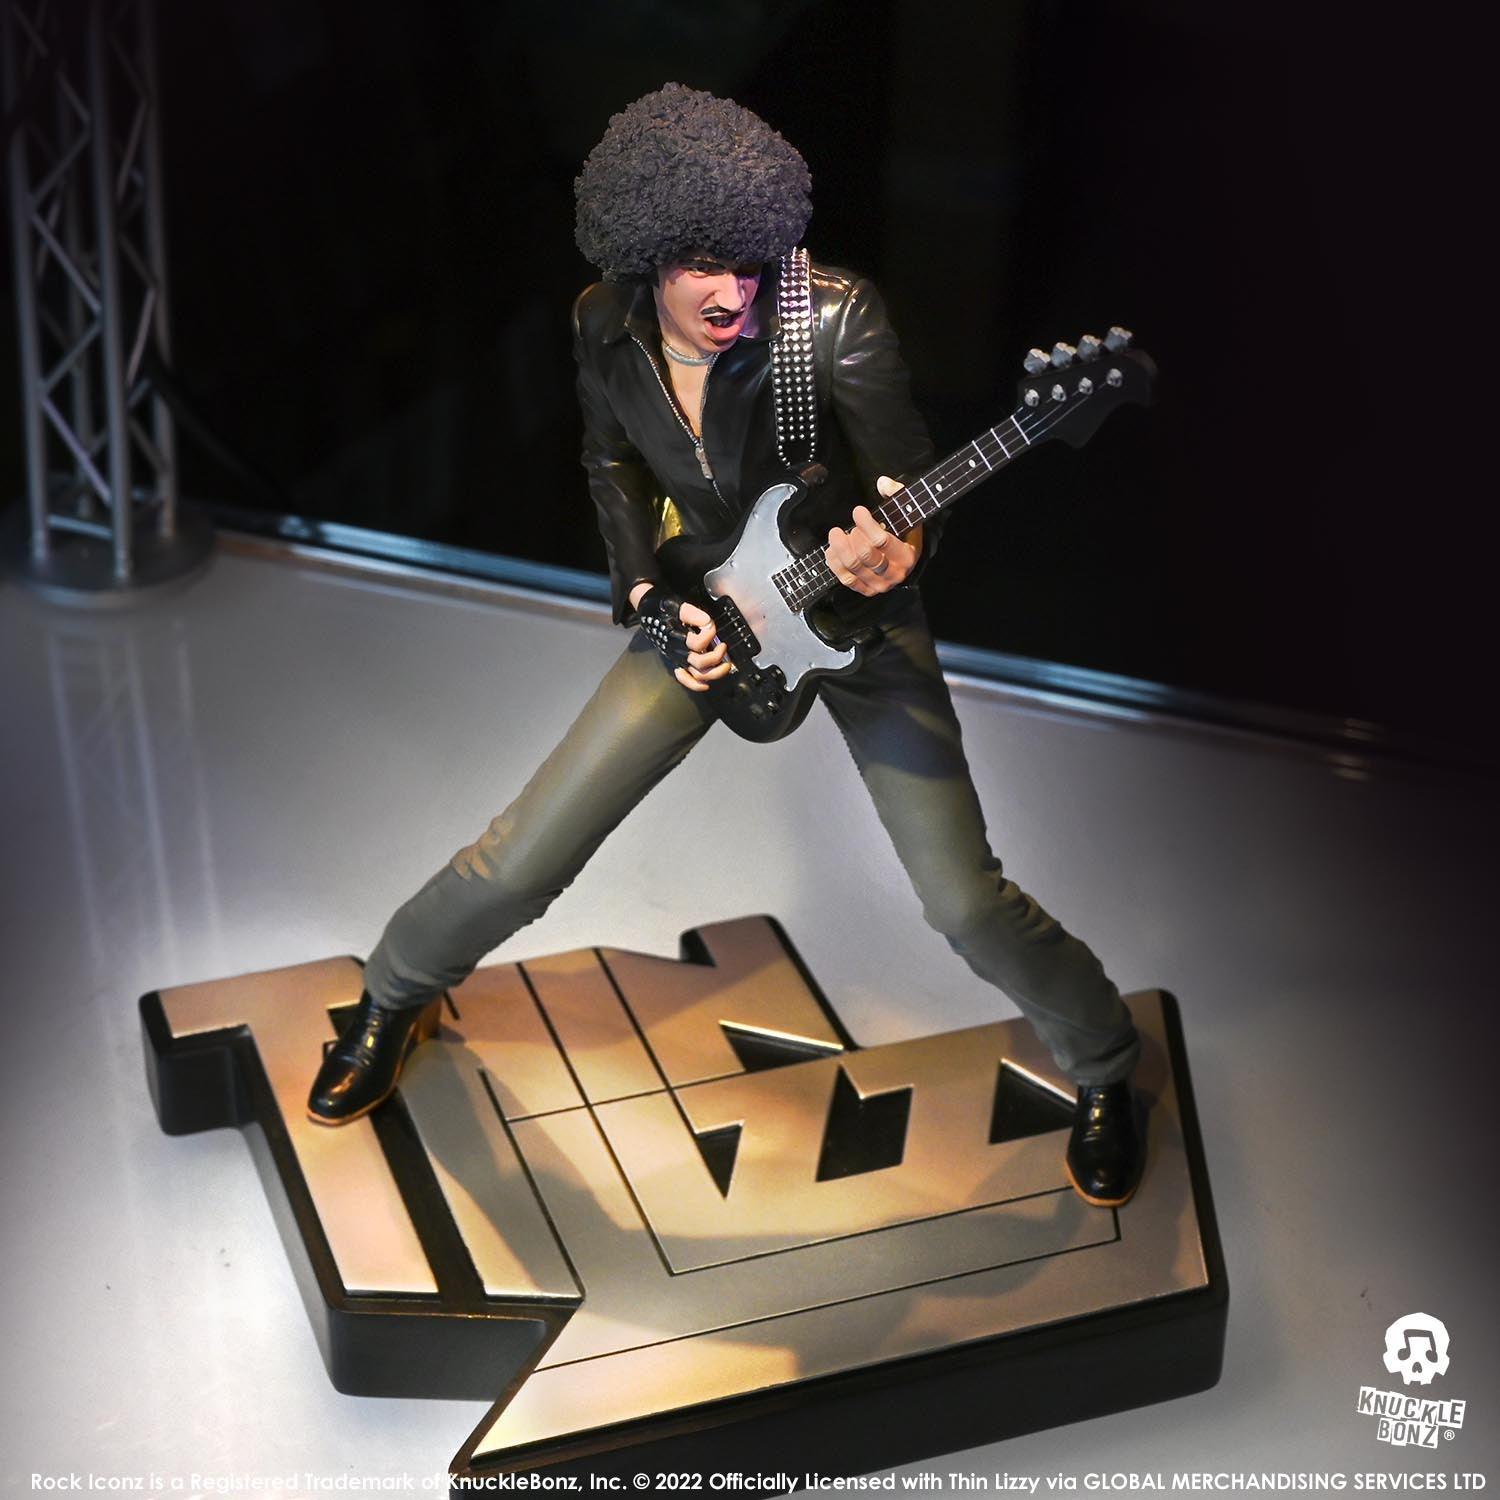 KNUTHINLIZZY100 Thin Lizzy - Phil Lynott Rock Iconz Statue - KnuckleBonz - Titan Pop Culture